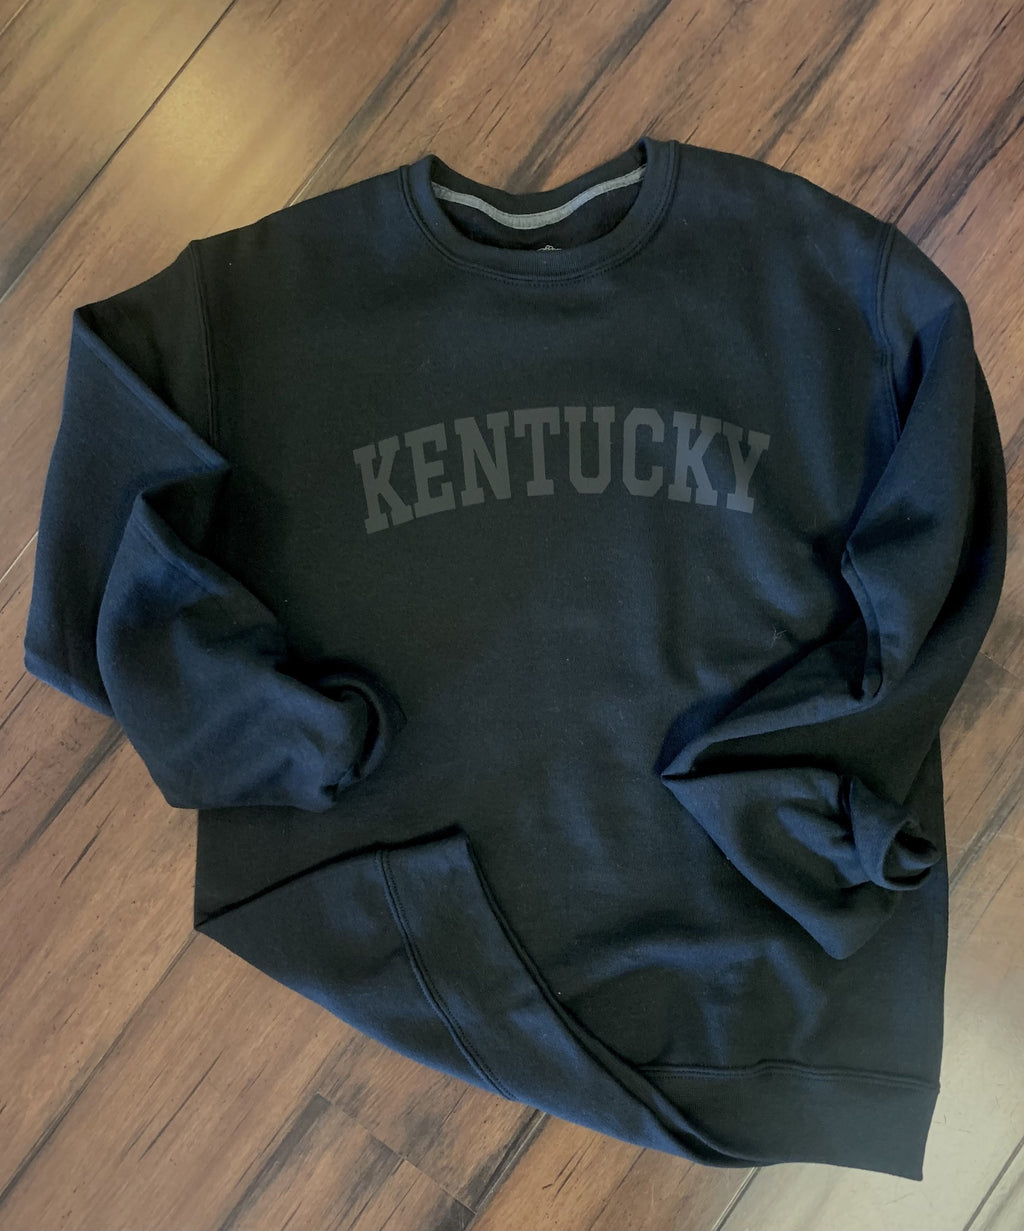 PREORDER Custom Black on Black Kentucky Sweatshirt